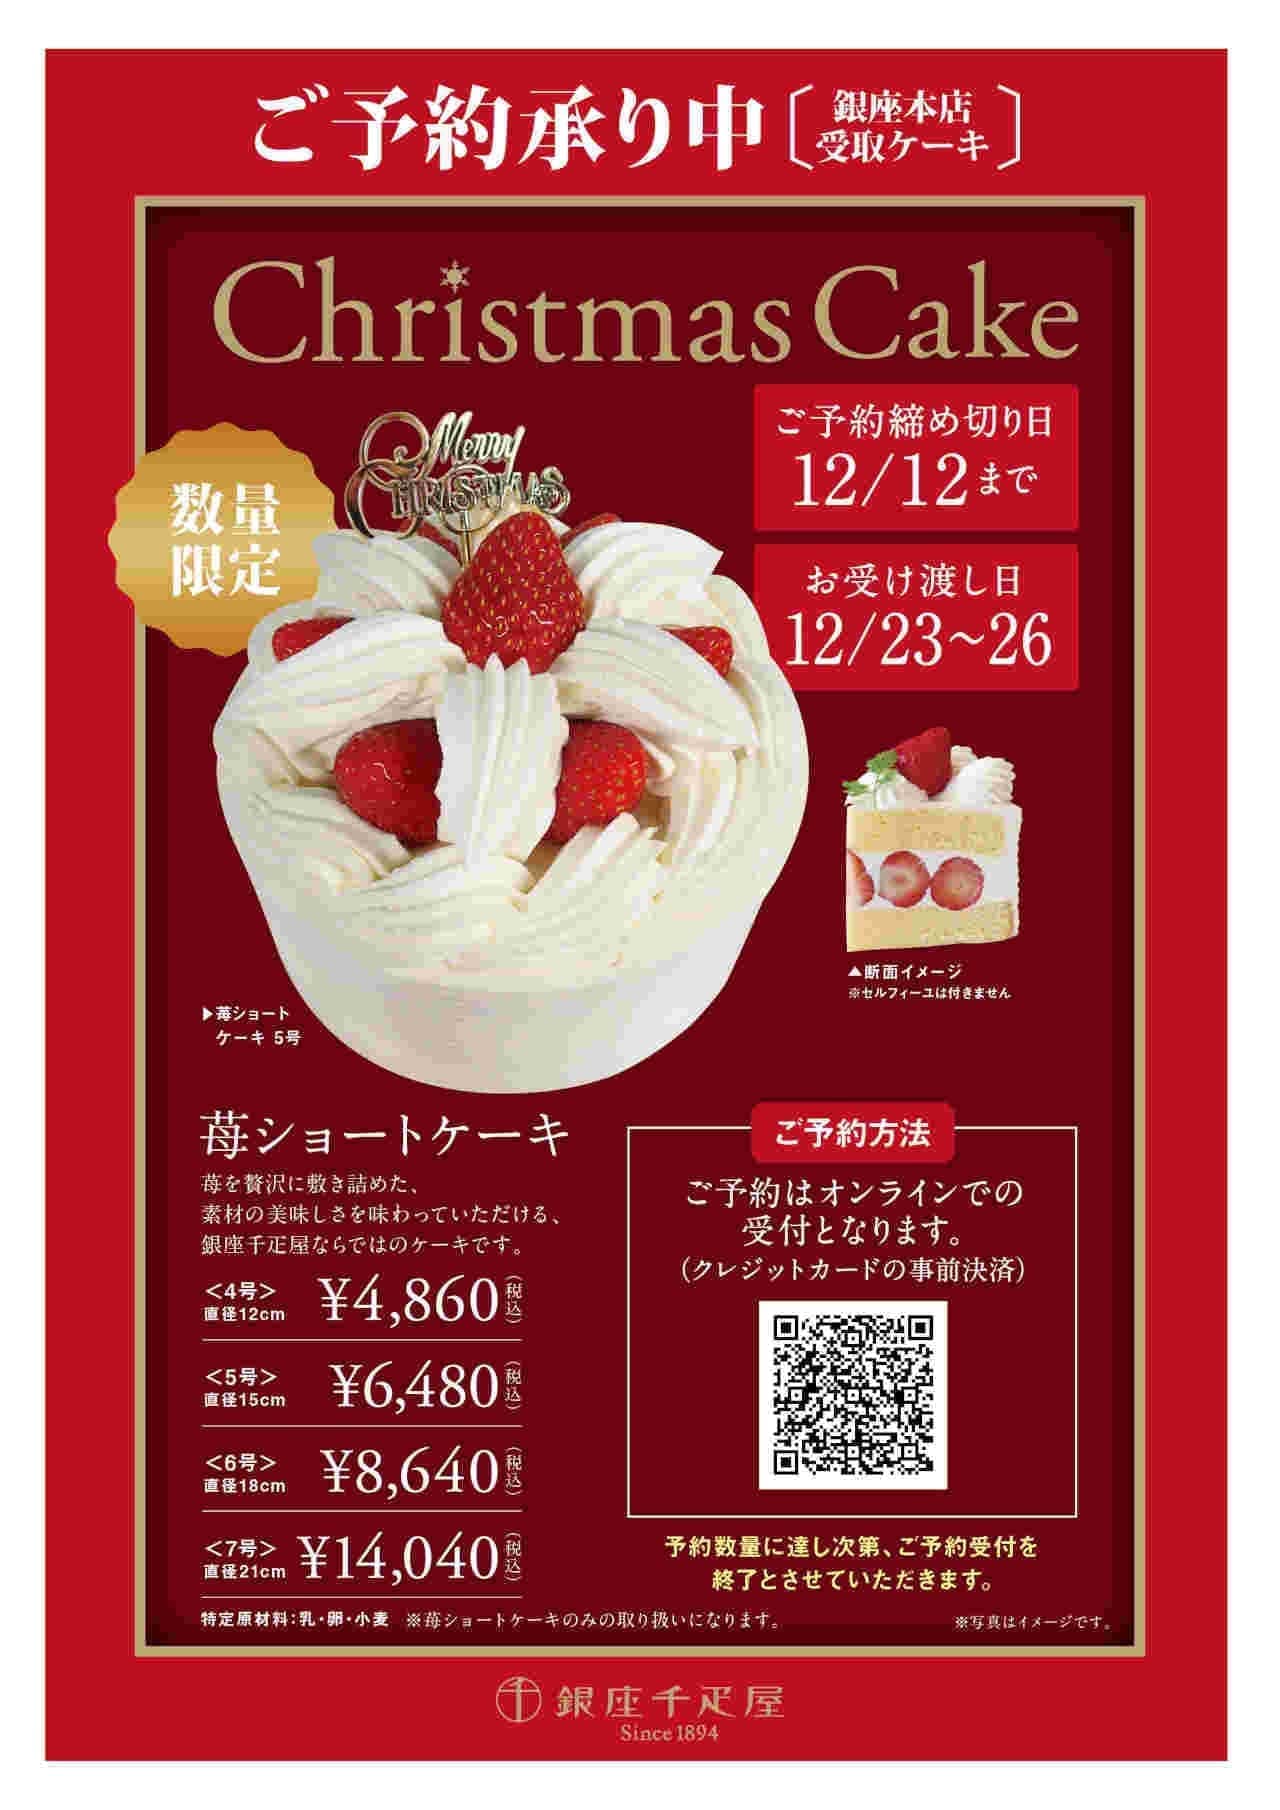 Ginza Sembikiya "Christmas Cake"